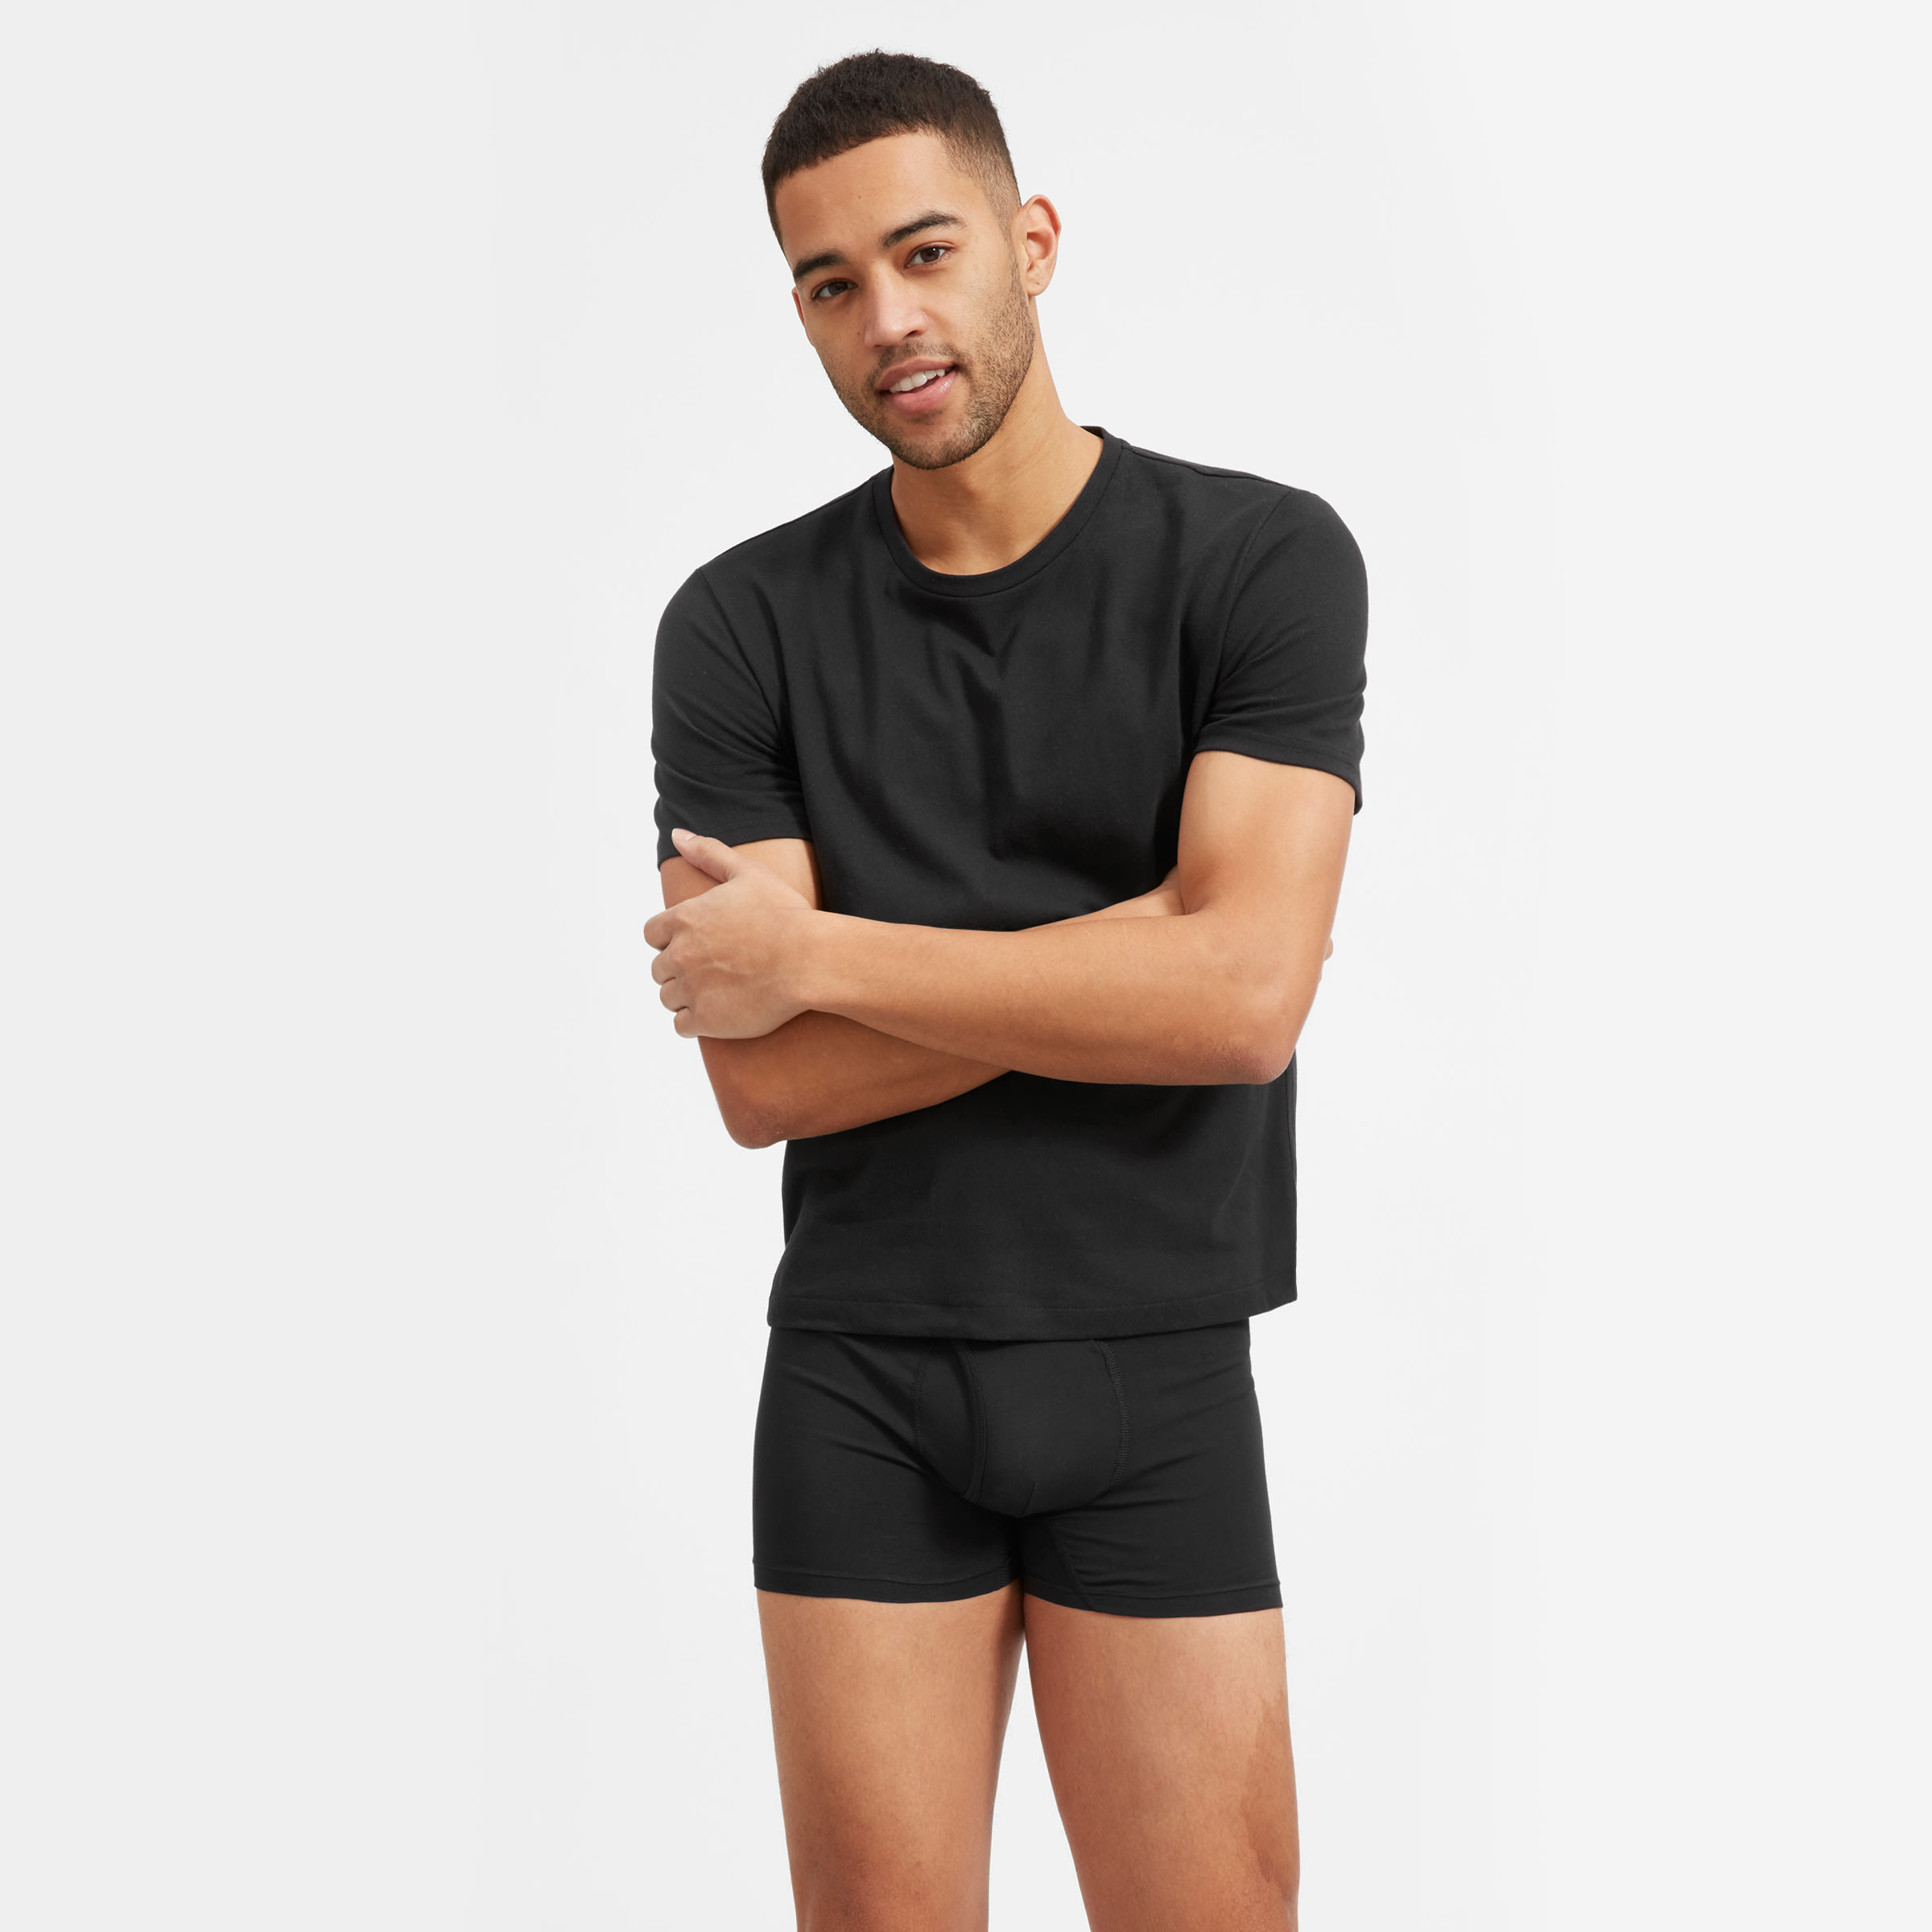 NUDUS Men's Underwear – 4-Pack Long Boxer Briefs – Luxury Cotton